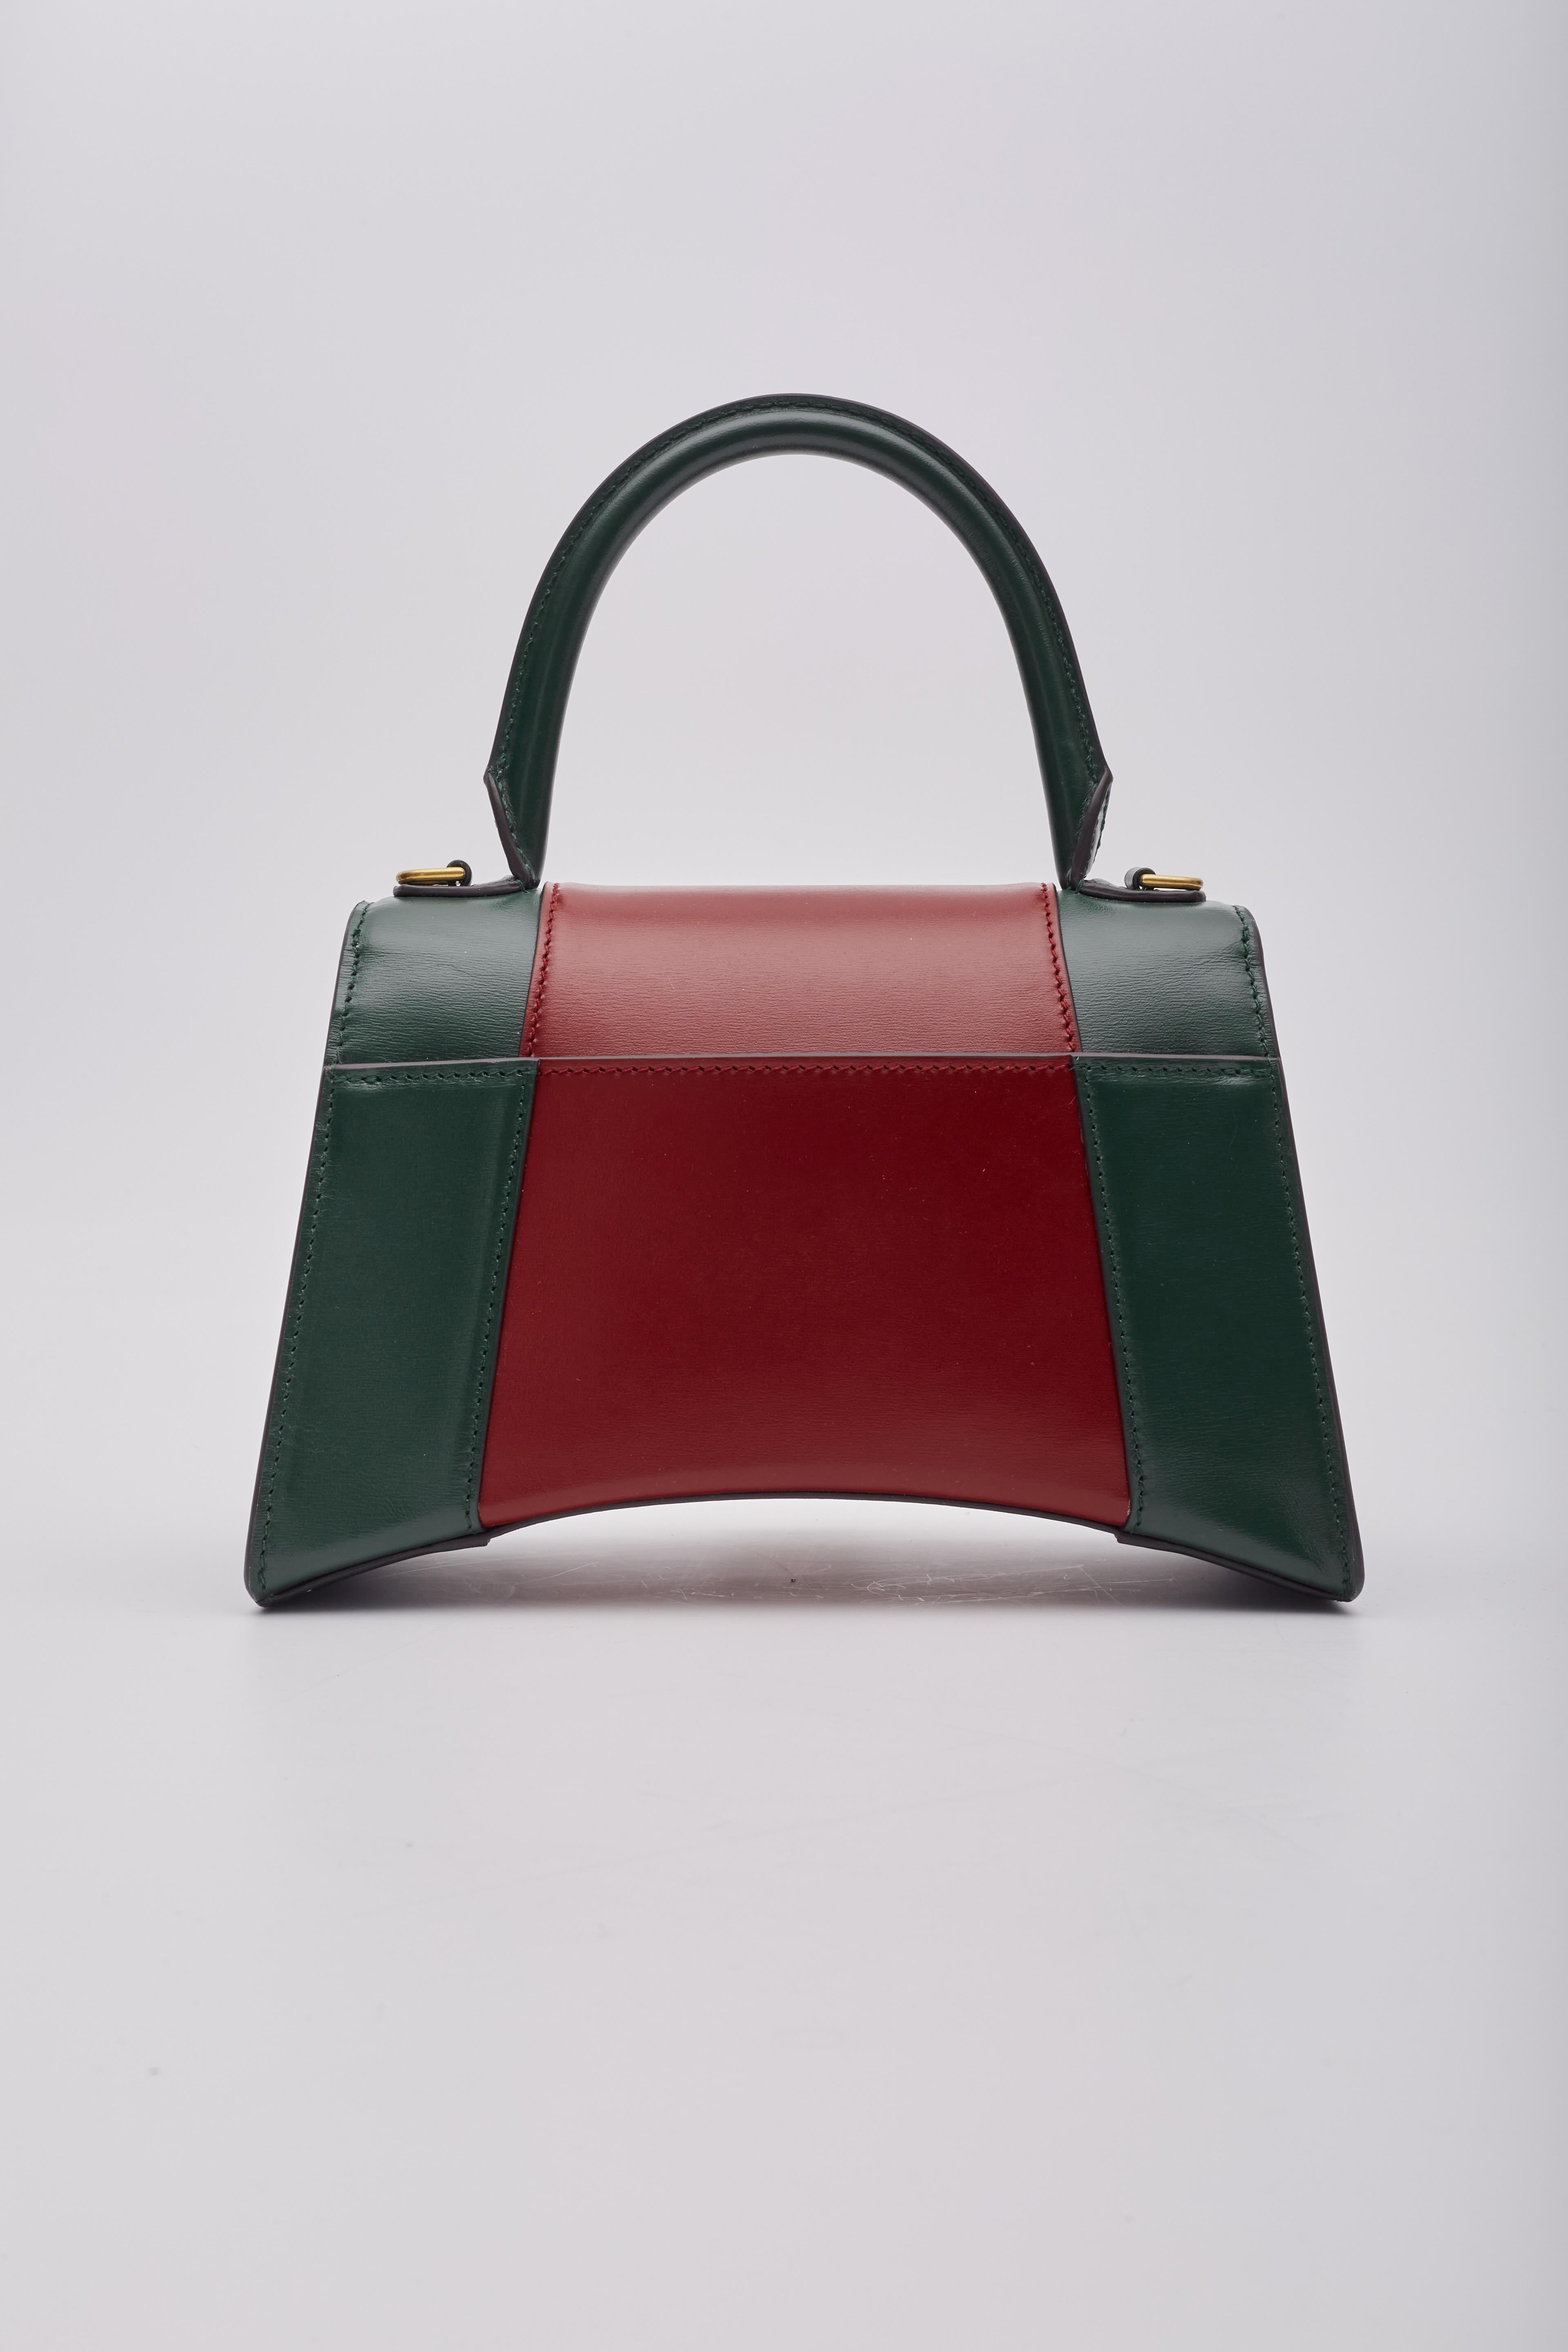 Balenciaga X Gucci The Hacker Project Web Hourglass Bag Small For Sale 1